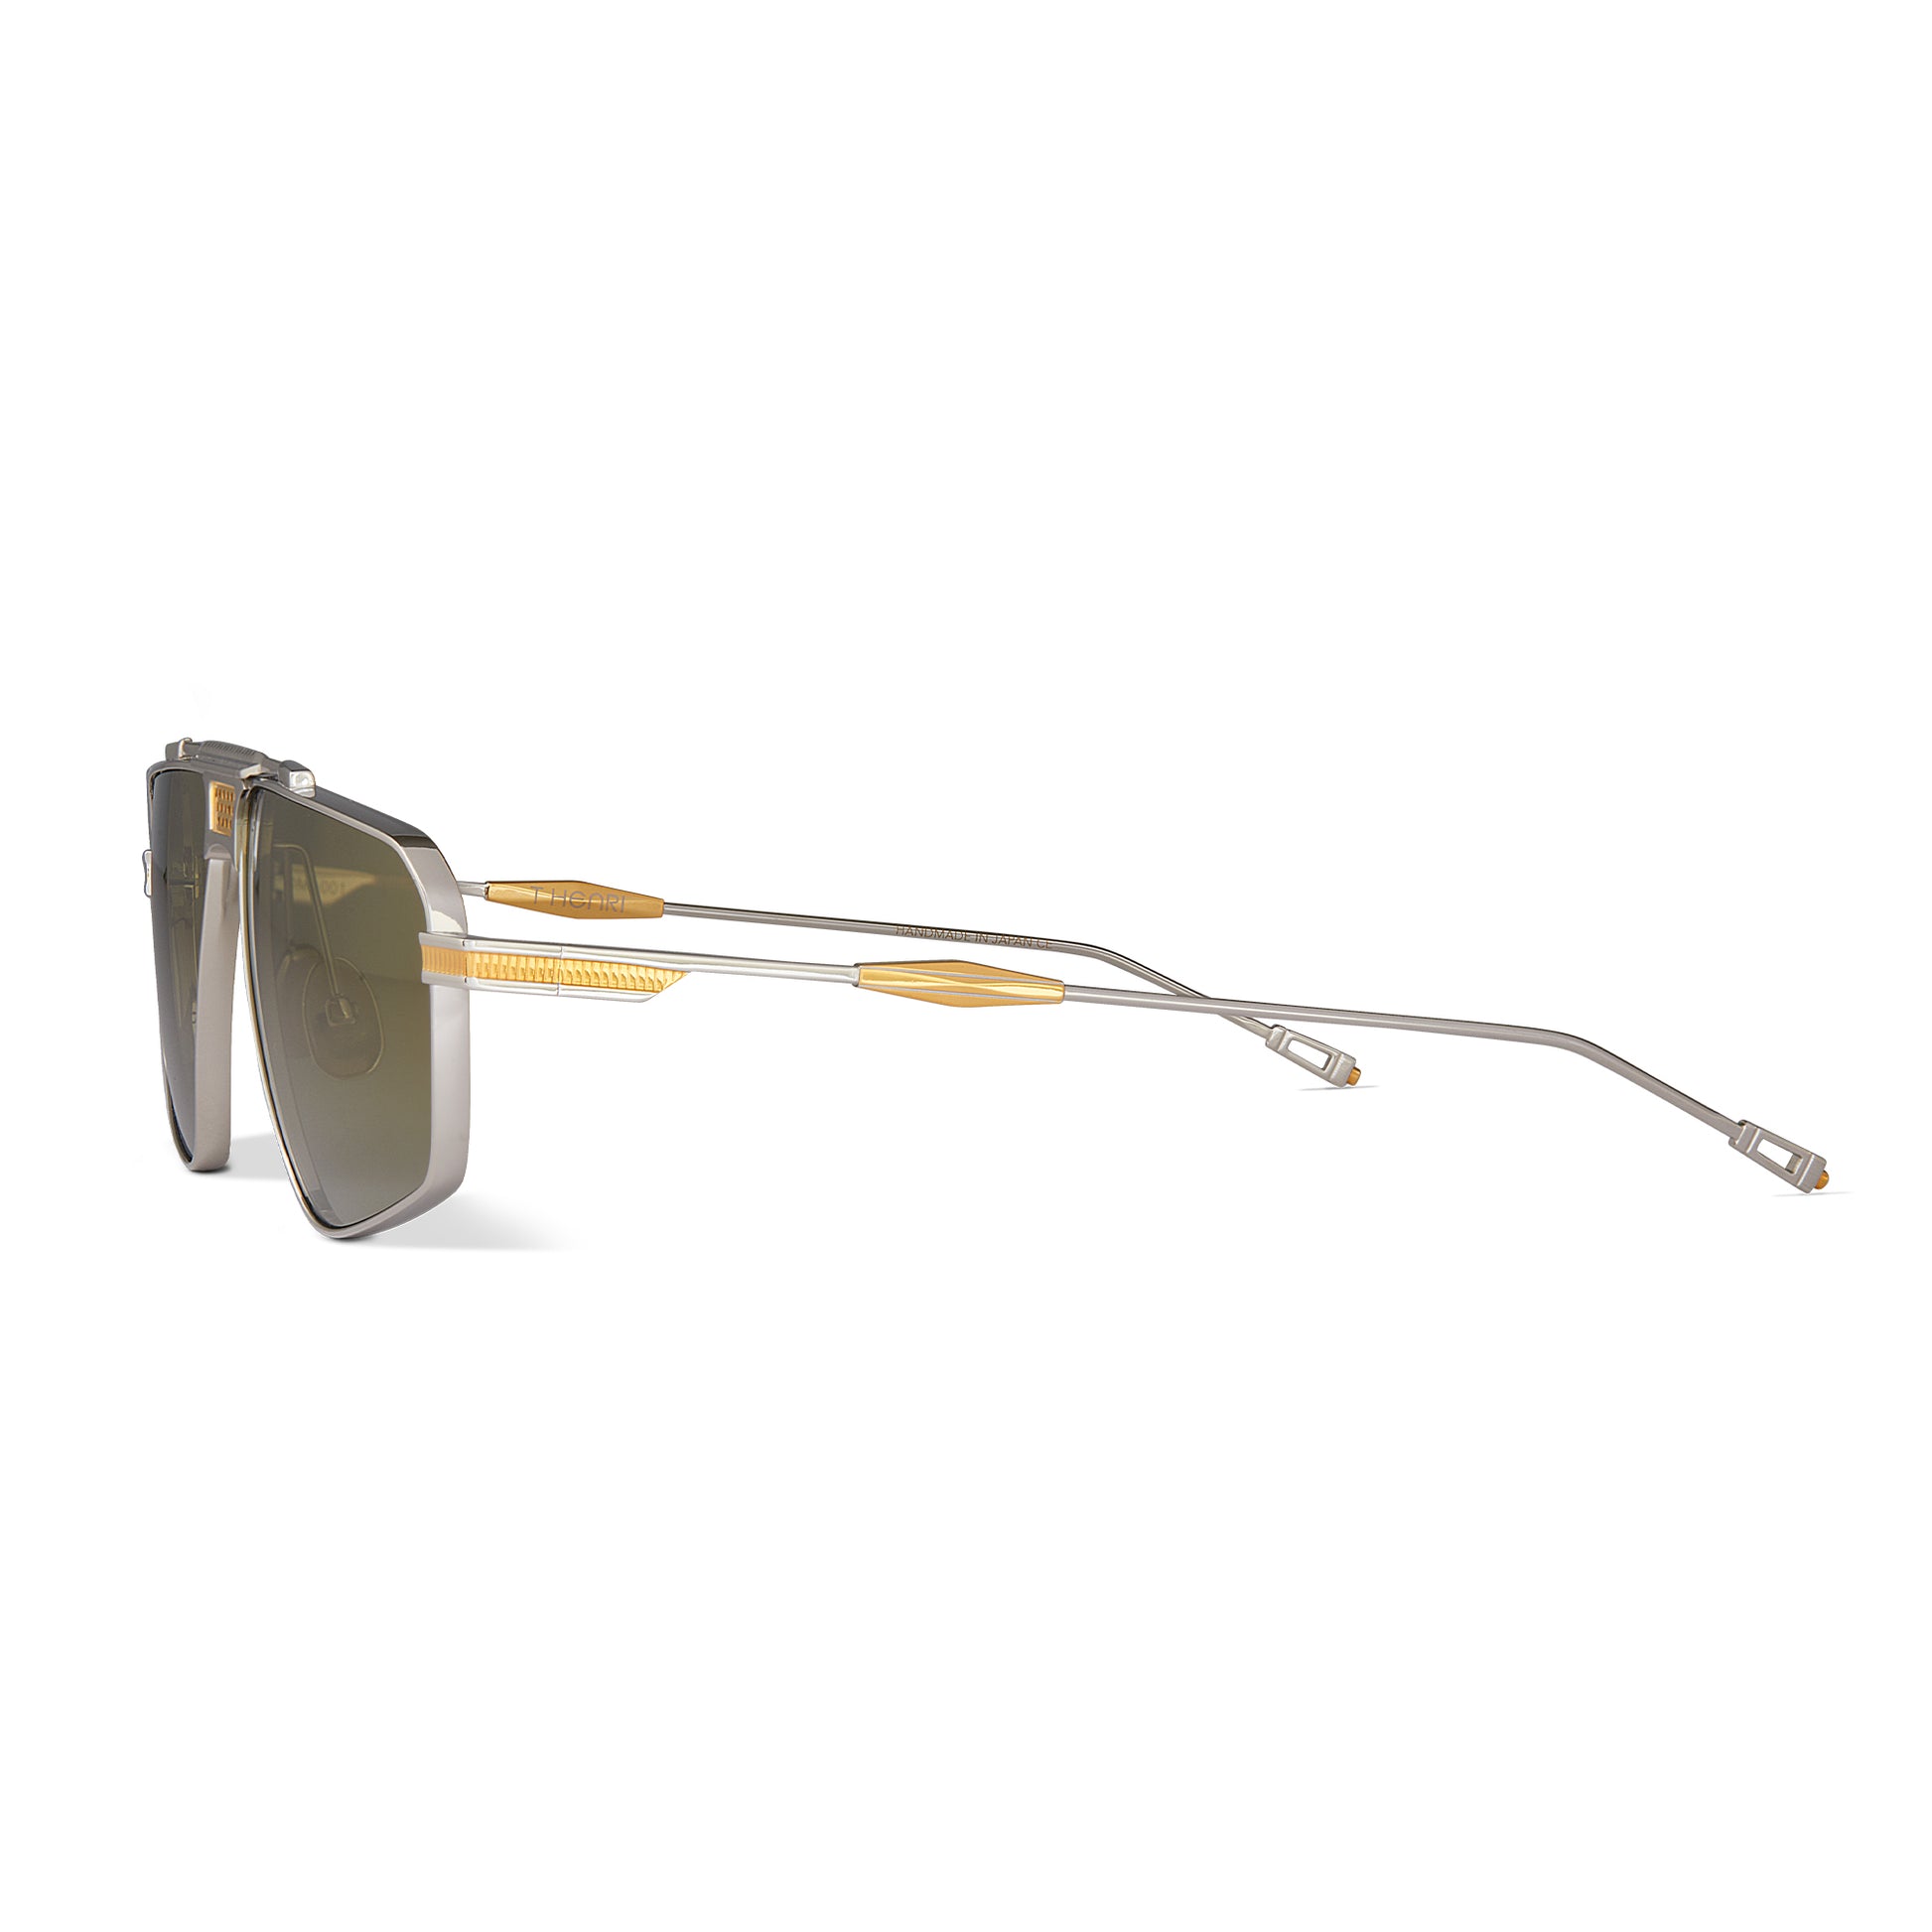 Buy T Henri Drophead Limited Edition Monaco Series | Sunglasses Frame | Authorized Dealer Adair Eyewear